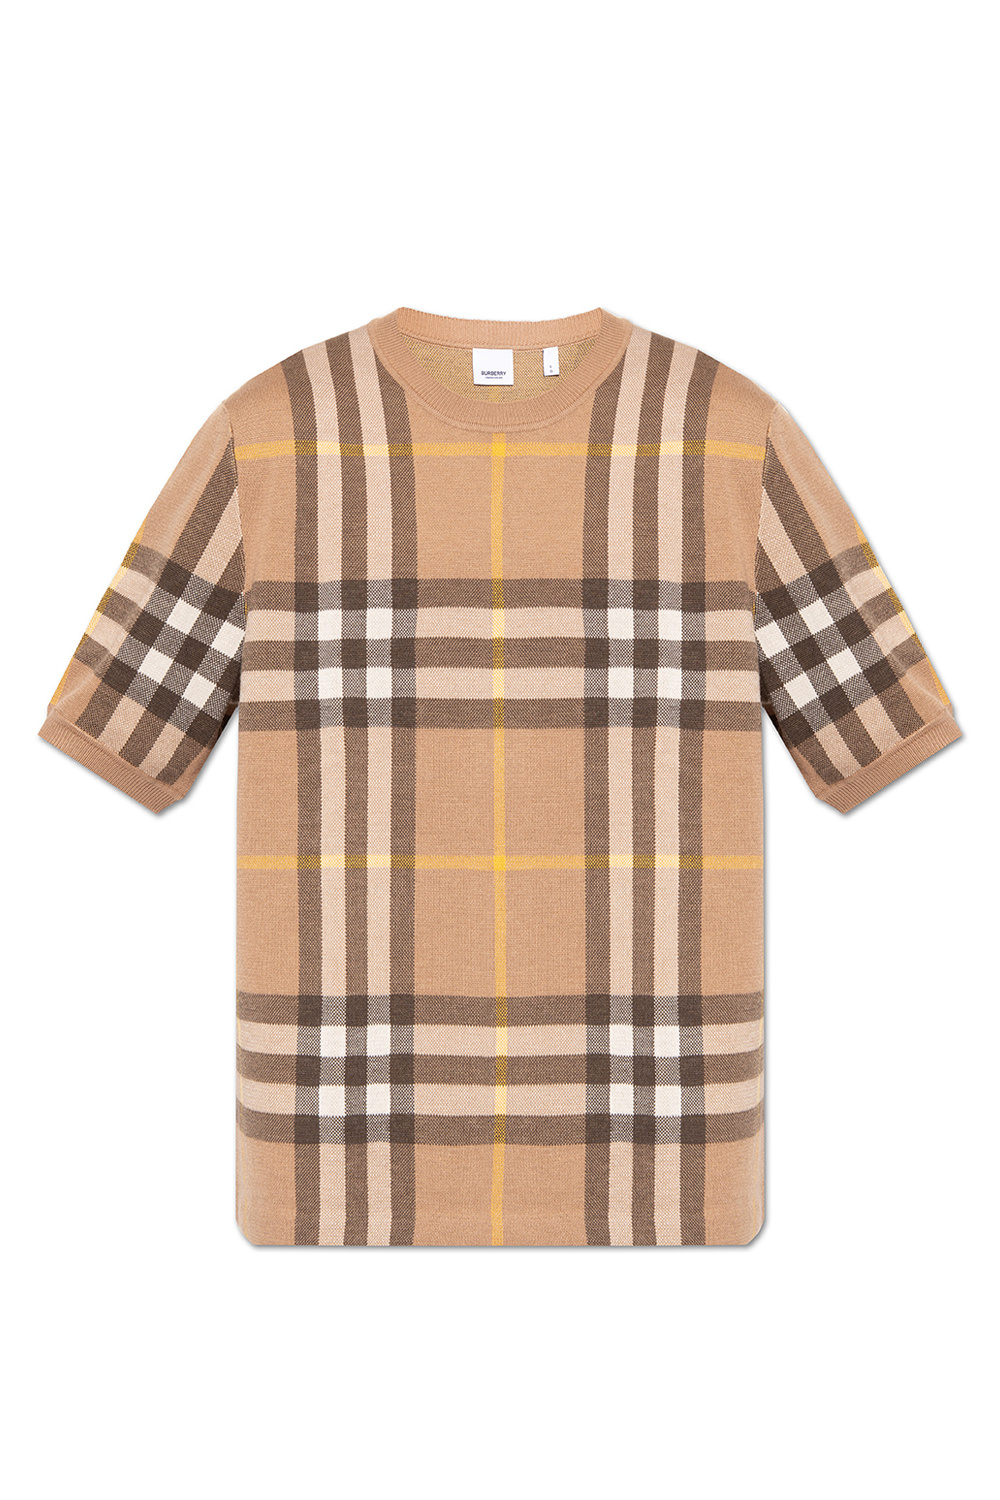 Burberry ‘Wells’ sweater